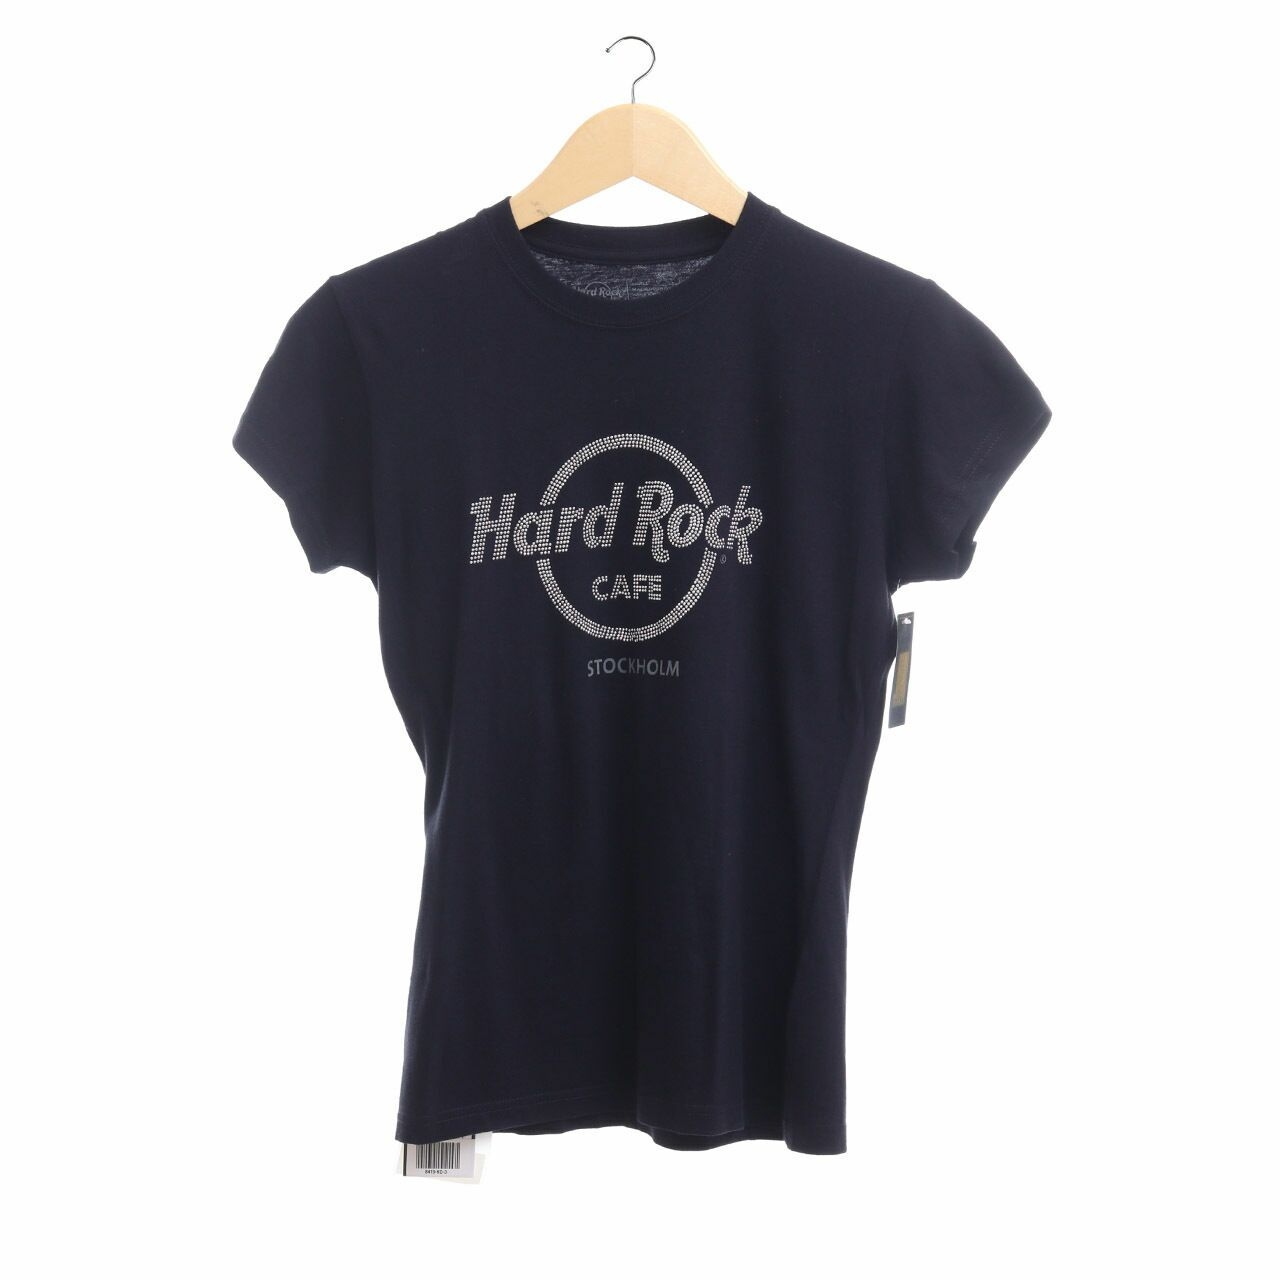 Hard Rock Black T-Shirt